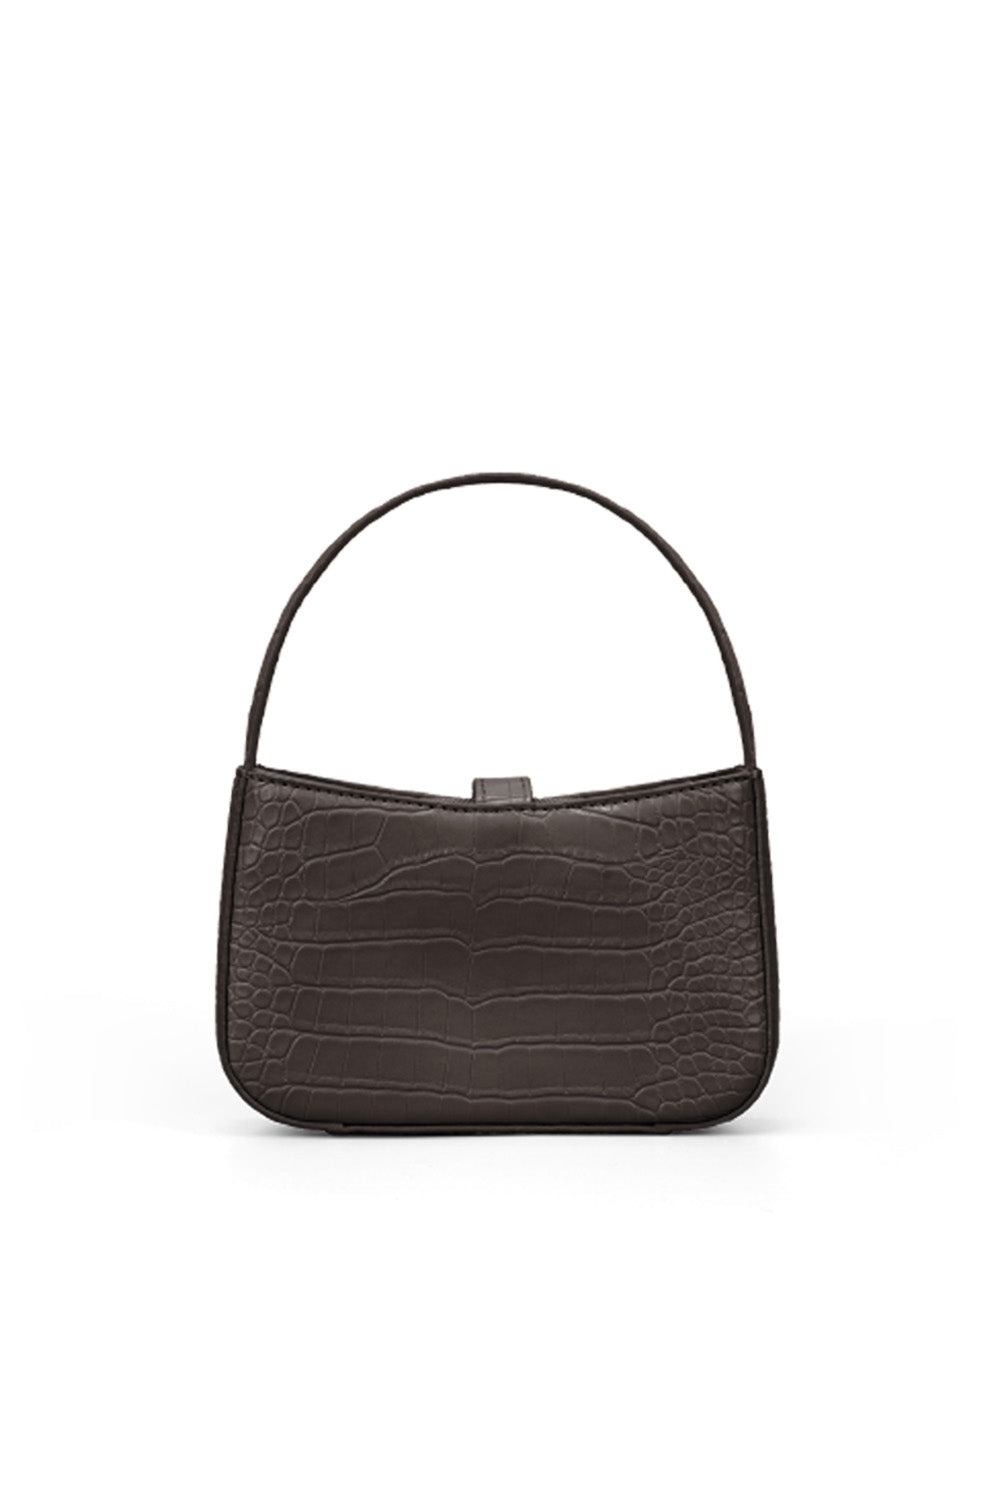 RR Juliet Croco Mini Shoulder Bag in Charcoal